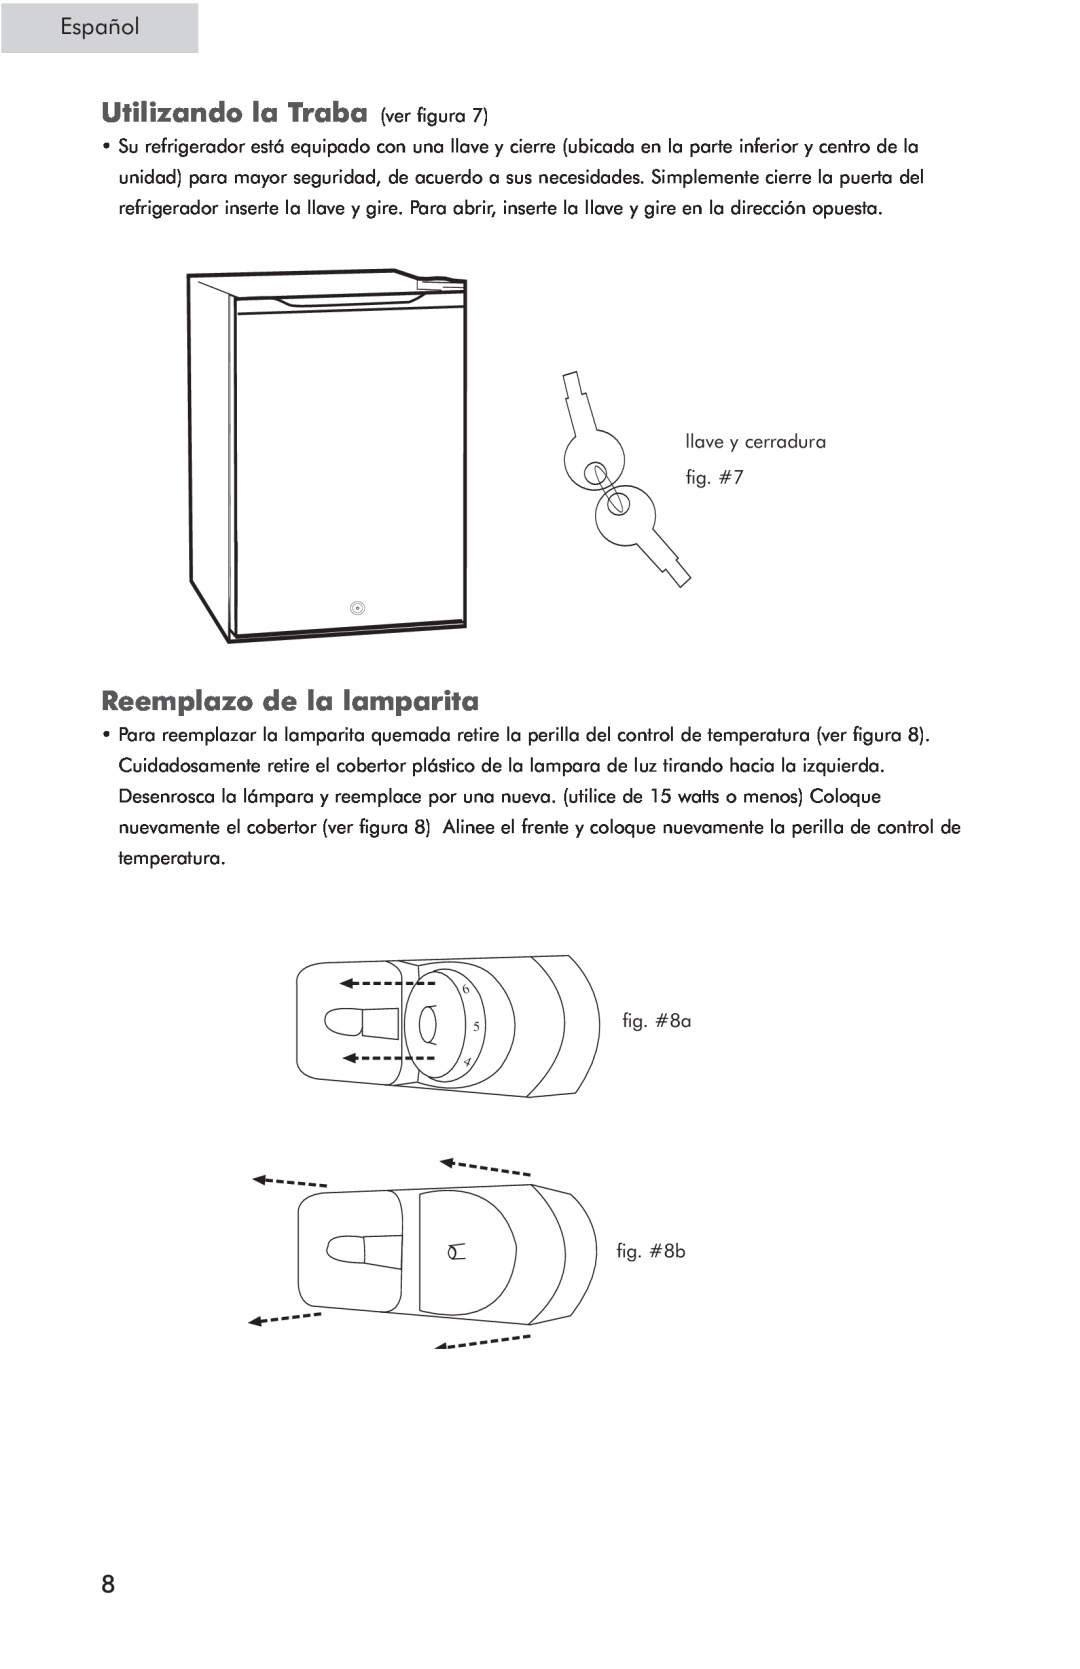 Haier HSQ05WNC user manual Utilizando la Traba ver figura, Reemplazo de la lamparita, Español 